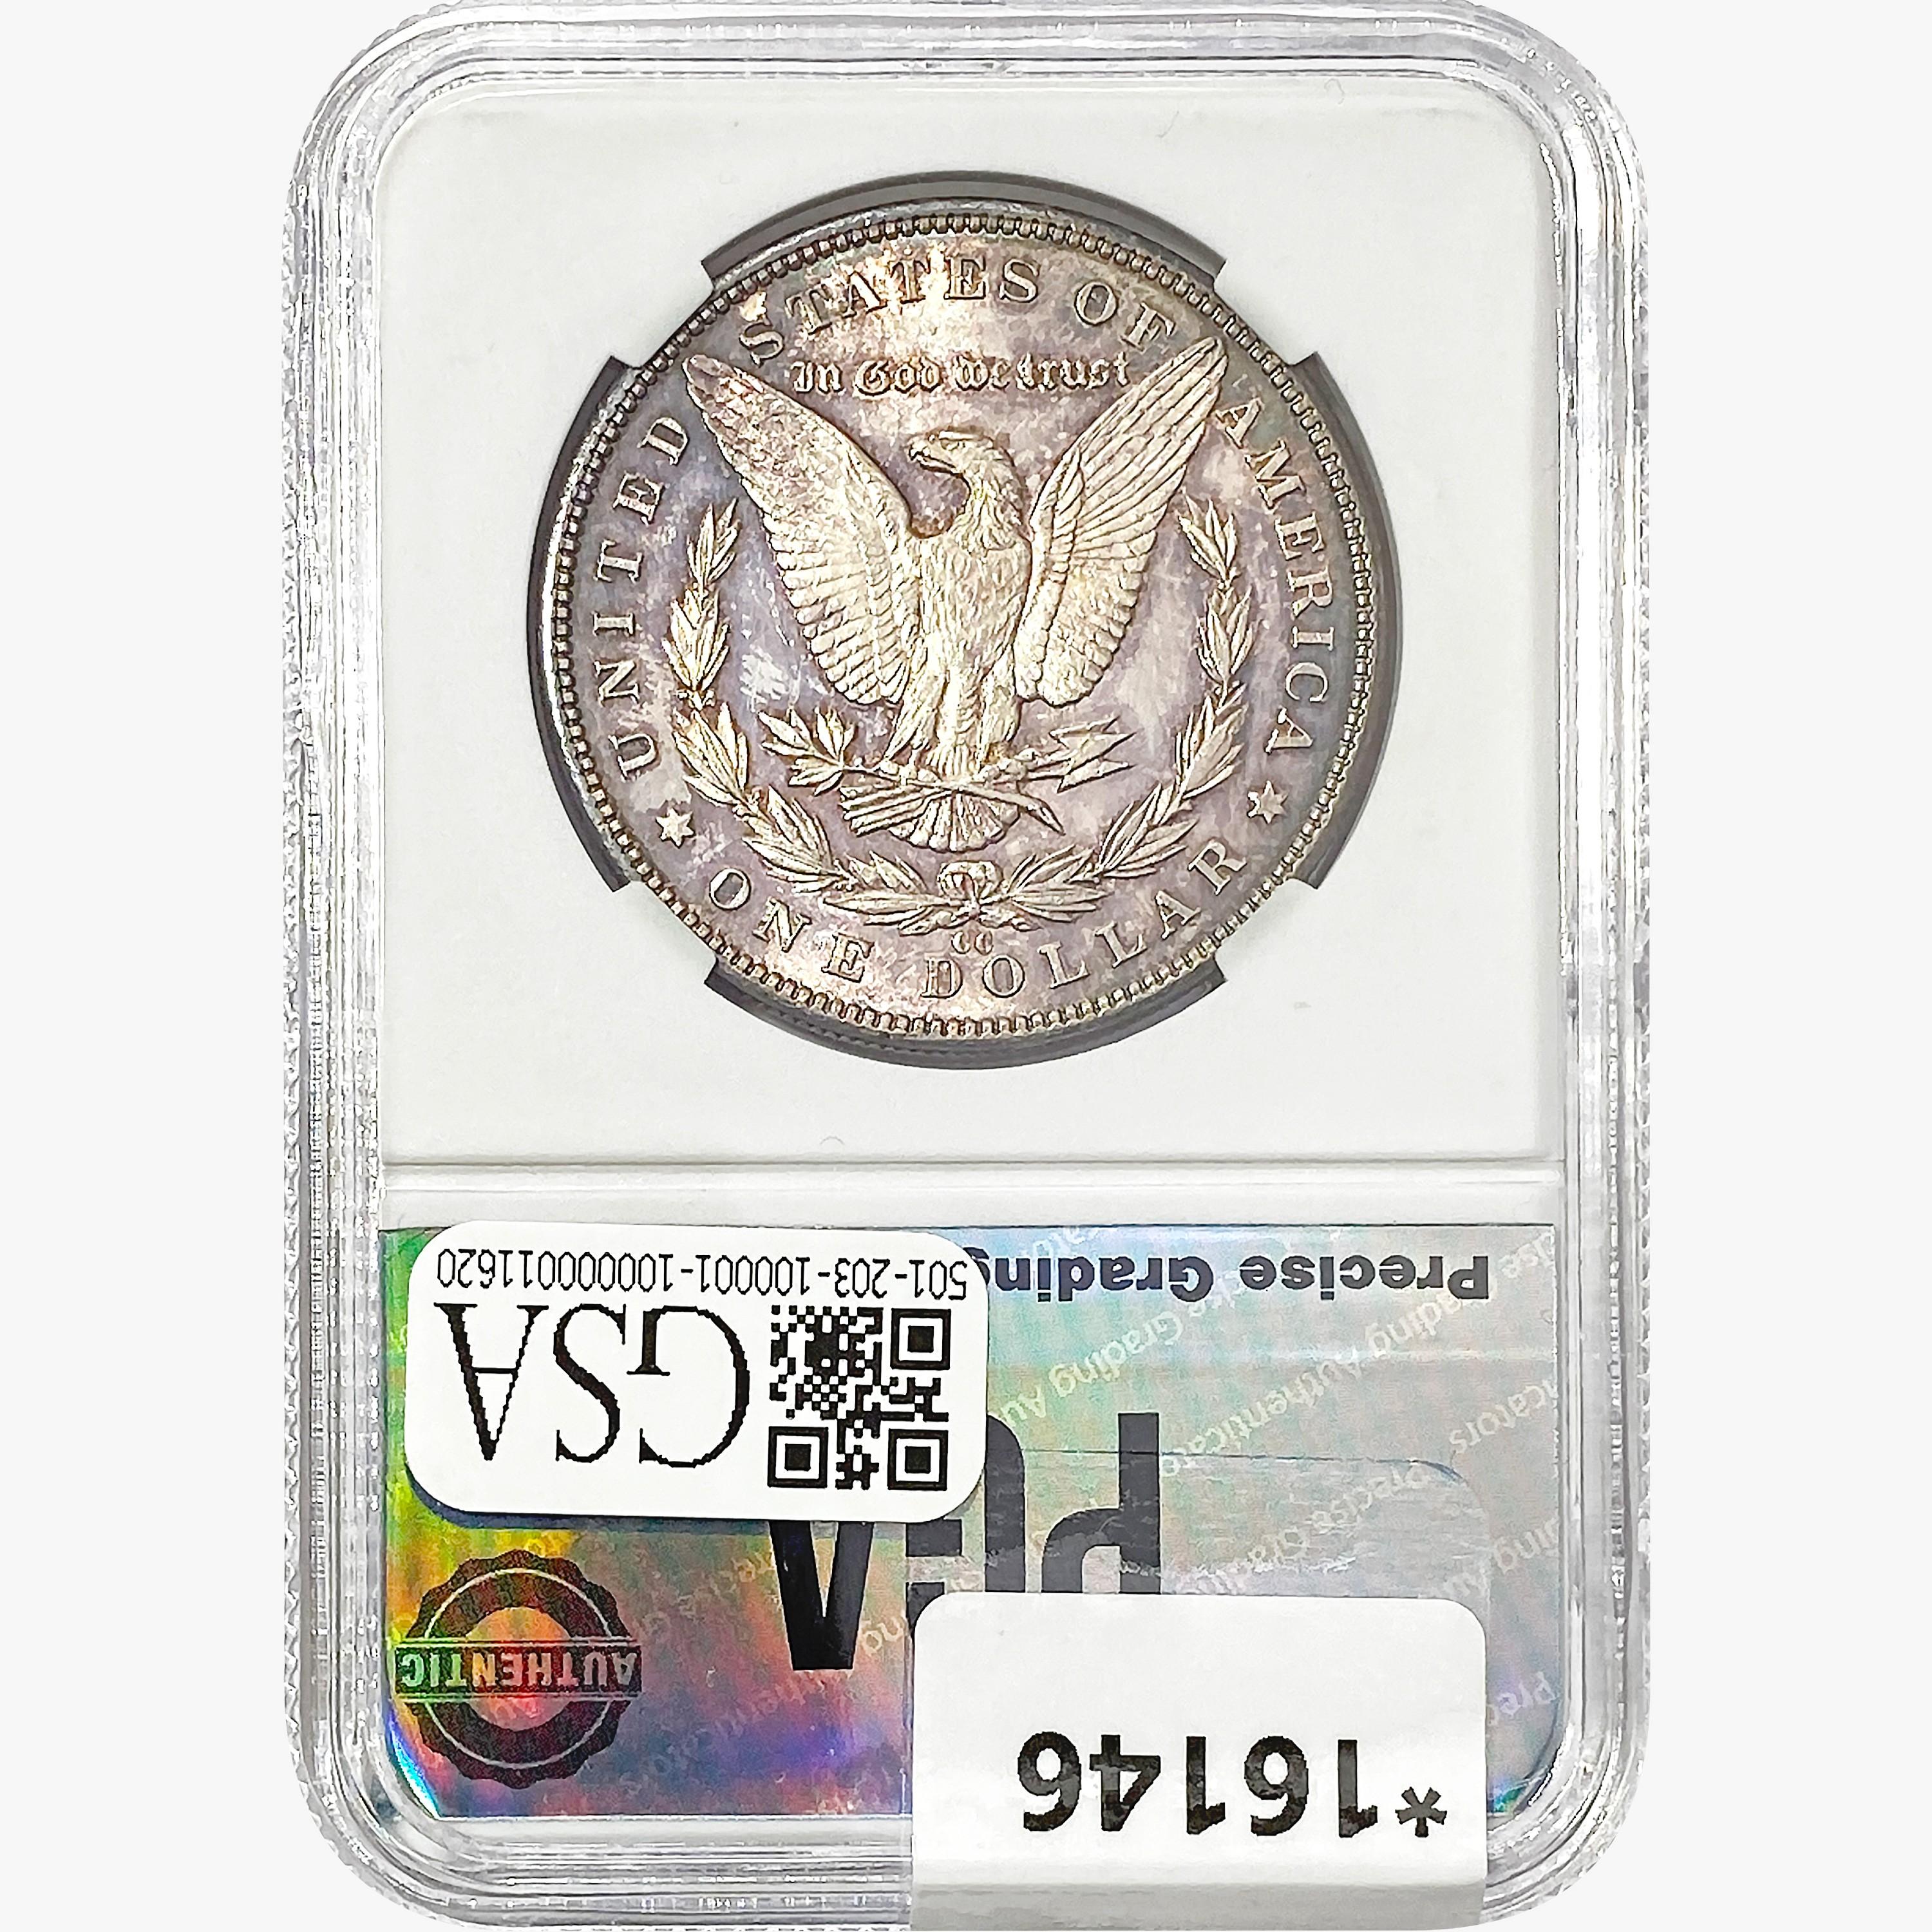 1890-CC Morgan Silver Dollar PGA MS65 PL